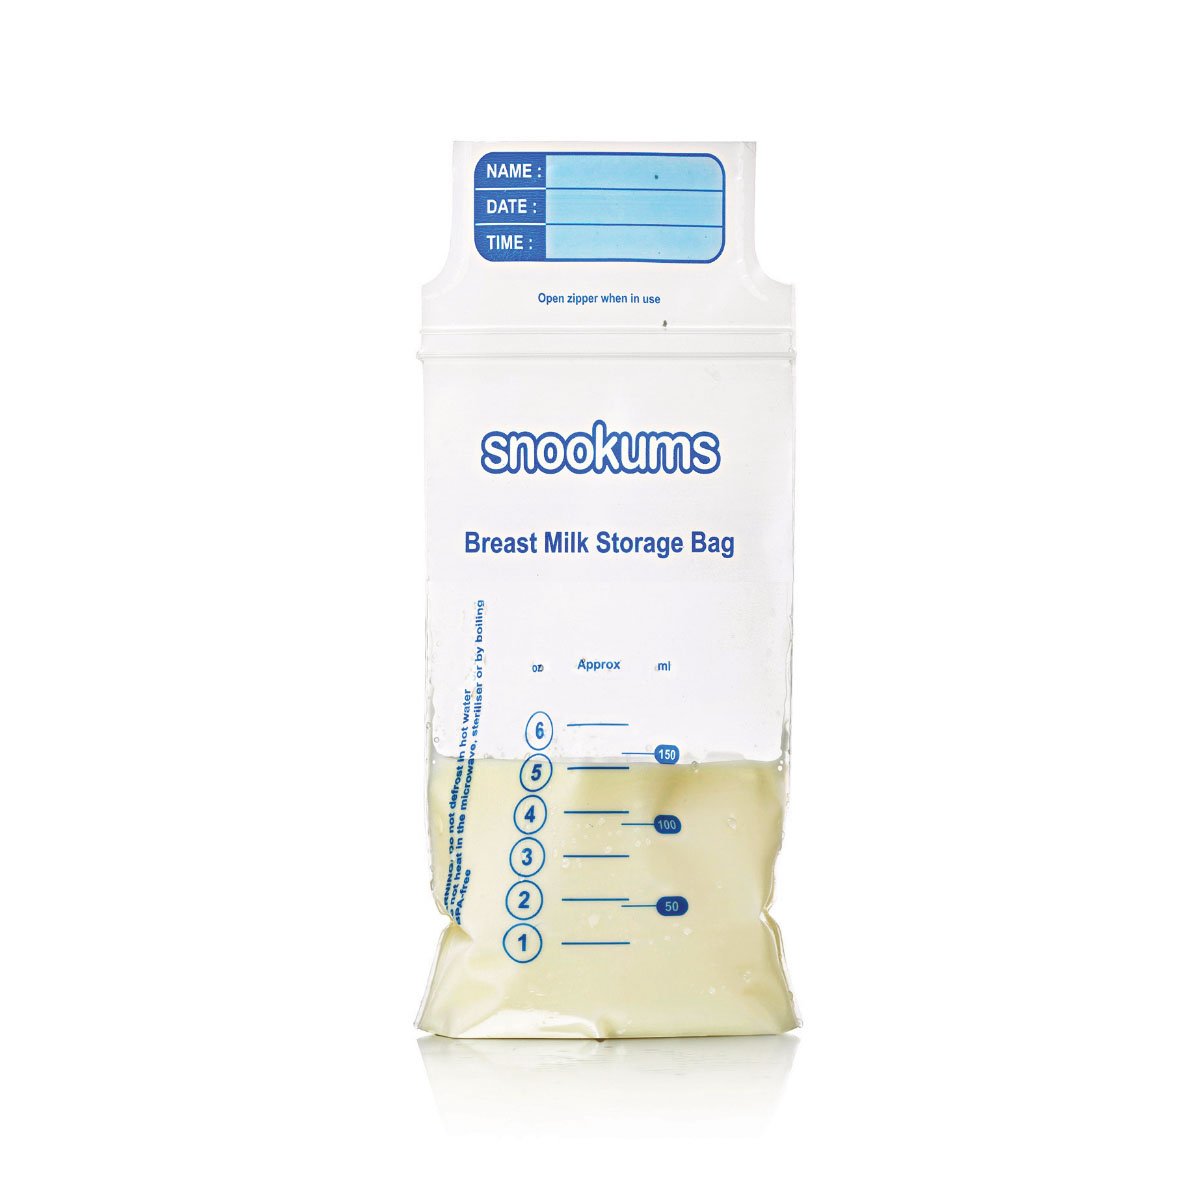 Snookums Pre-sterilized Breast Milk Storage Bag (25 x 150ml bags) - 303145